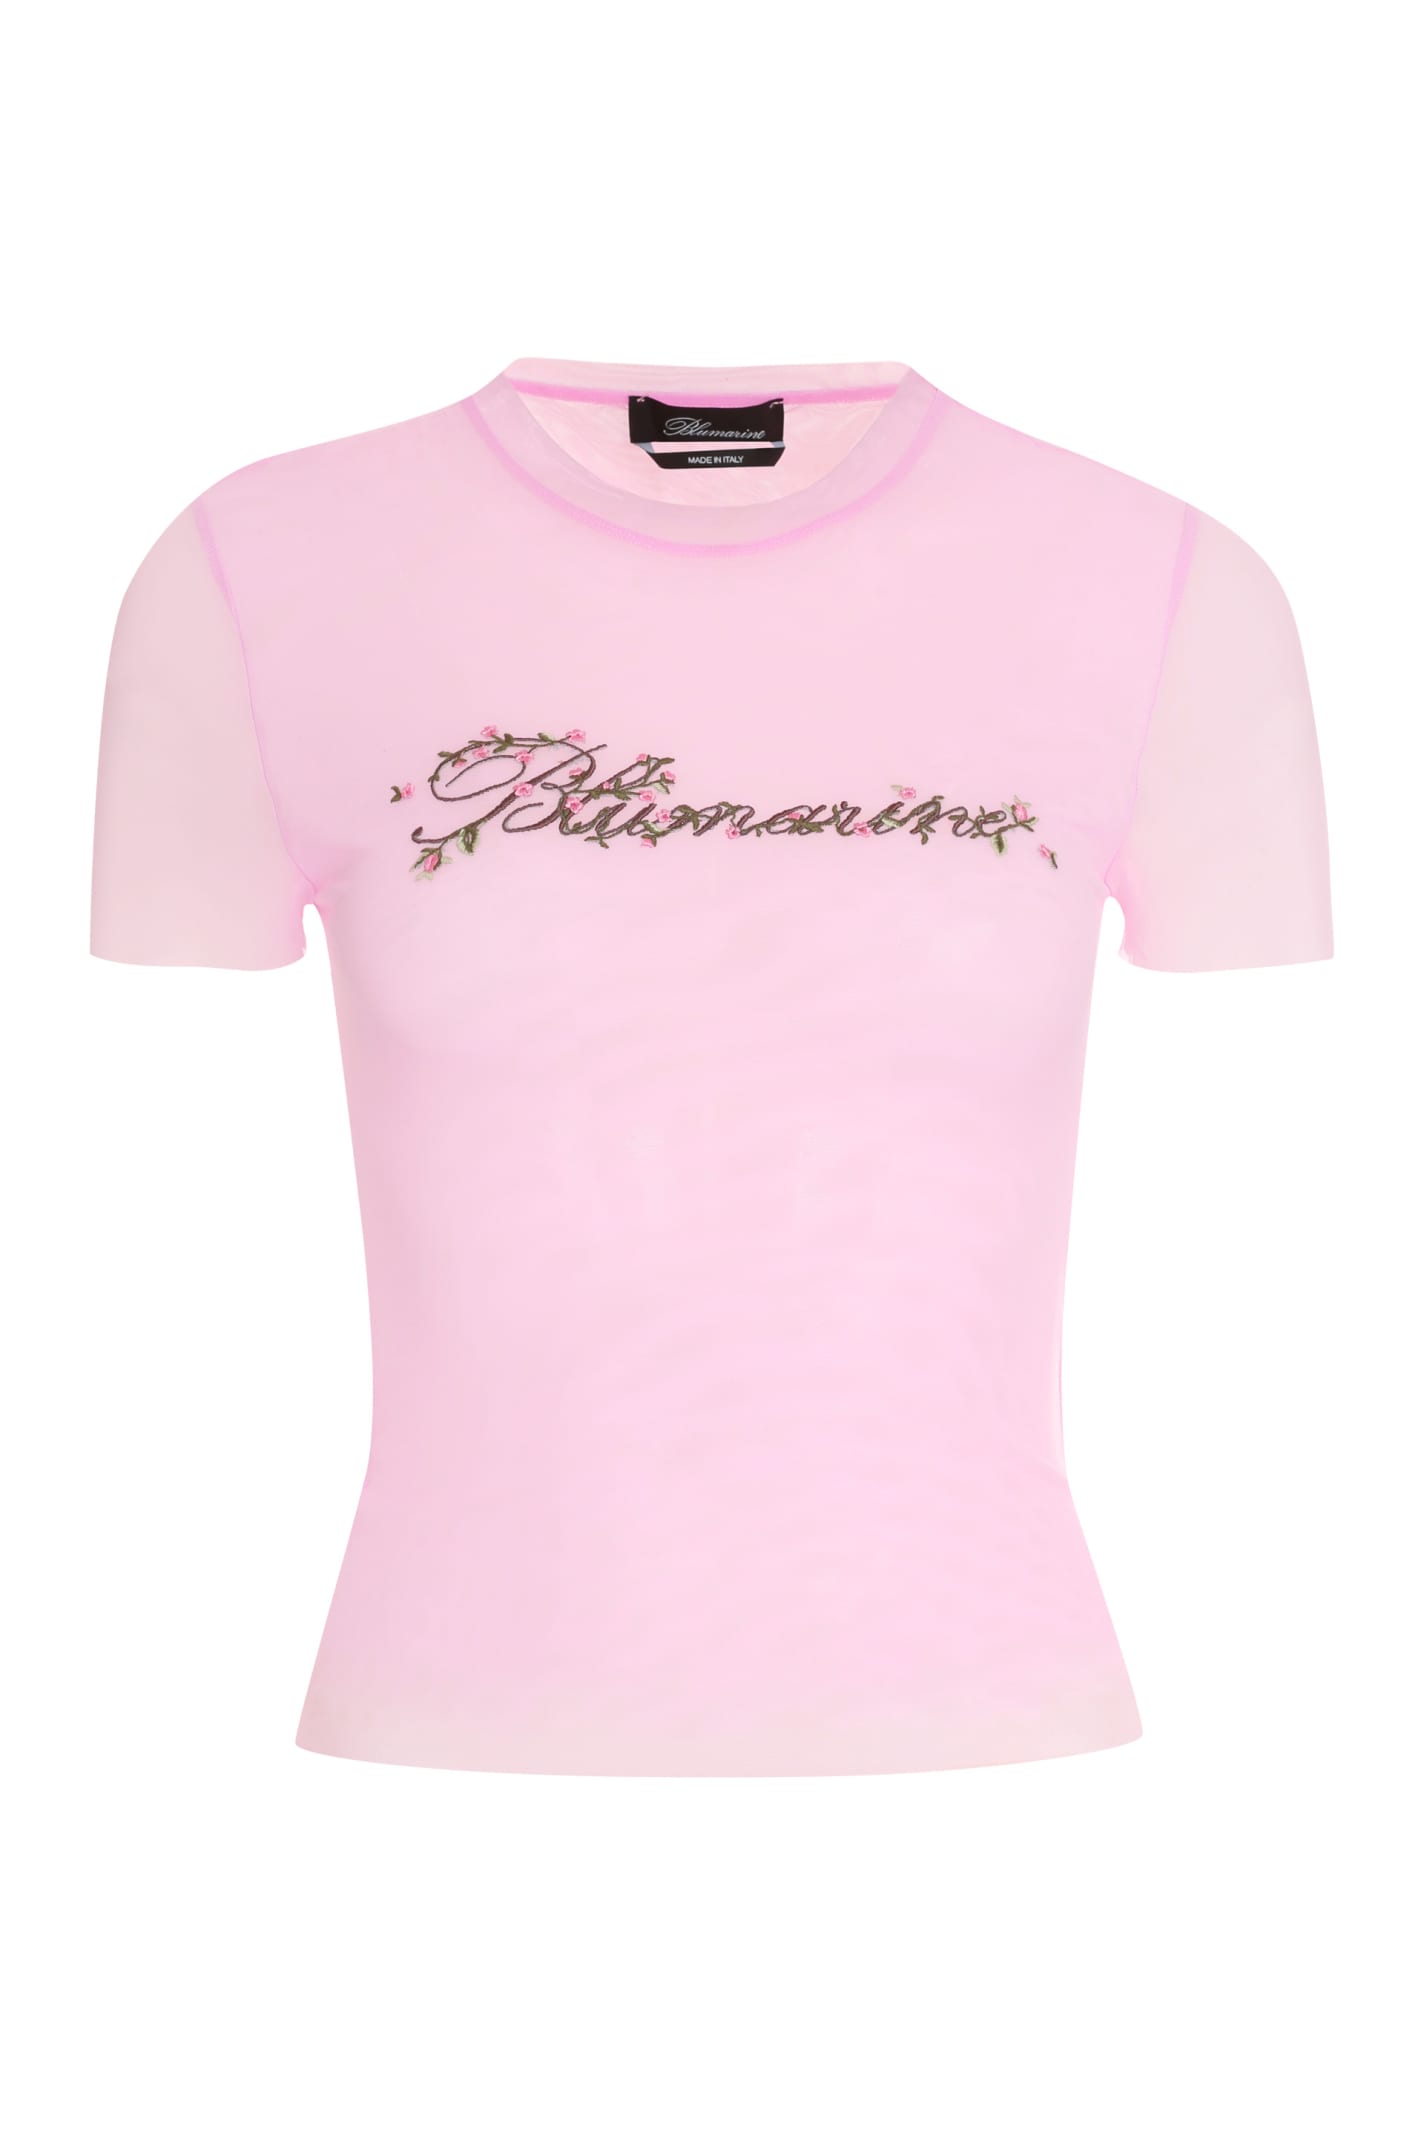 Blumarine Tulle T-shirt